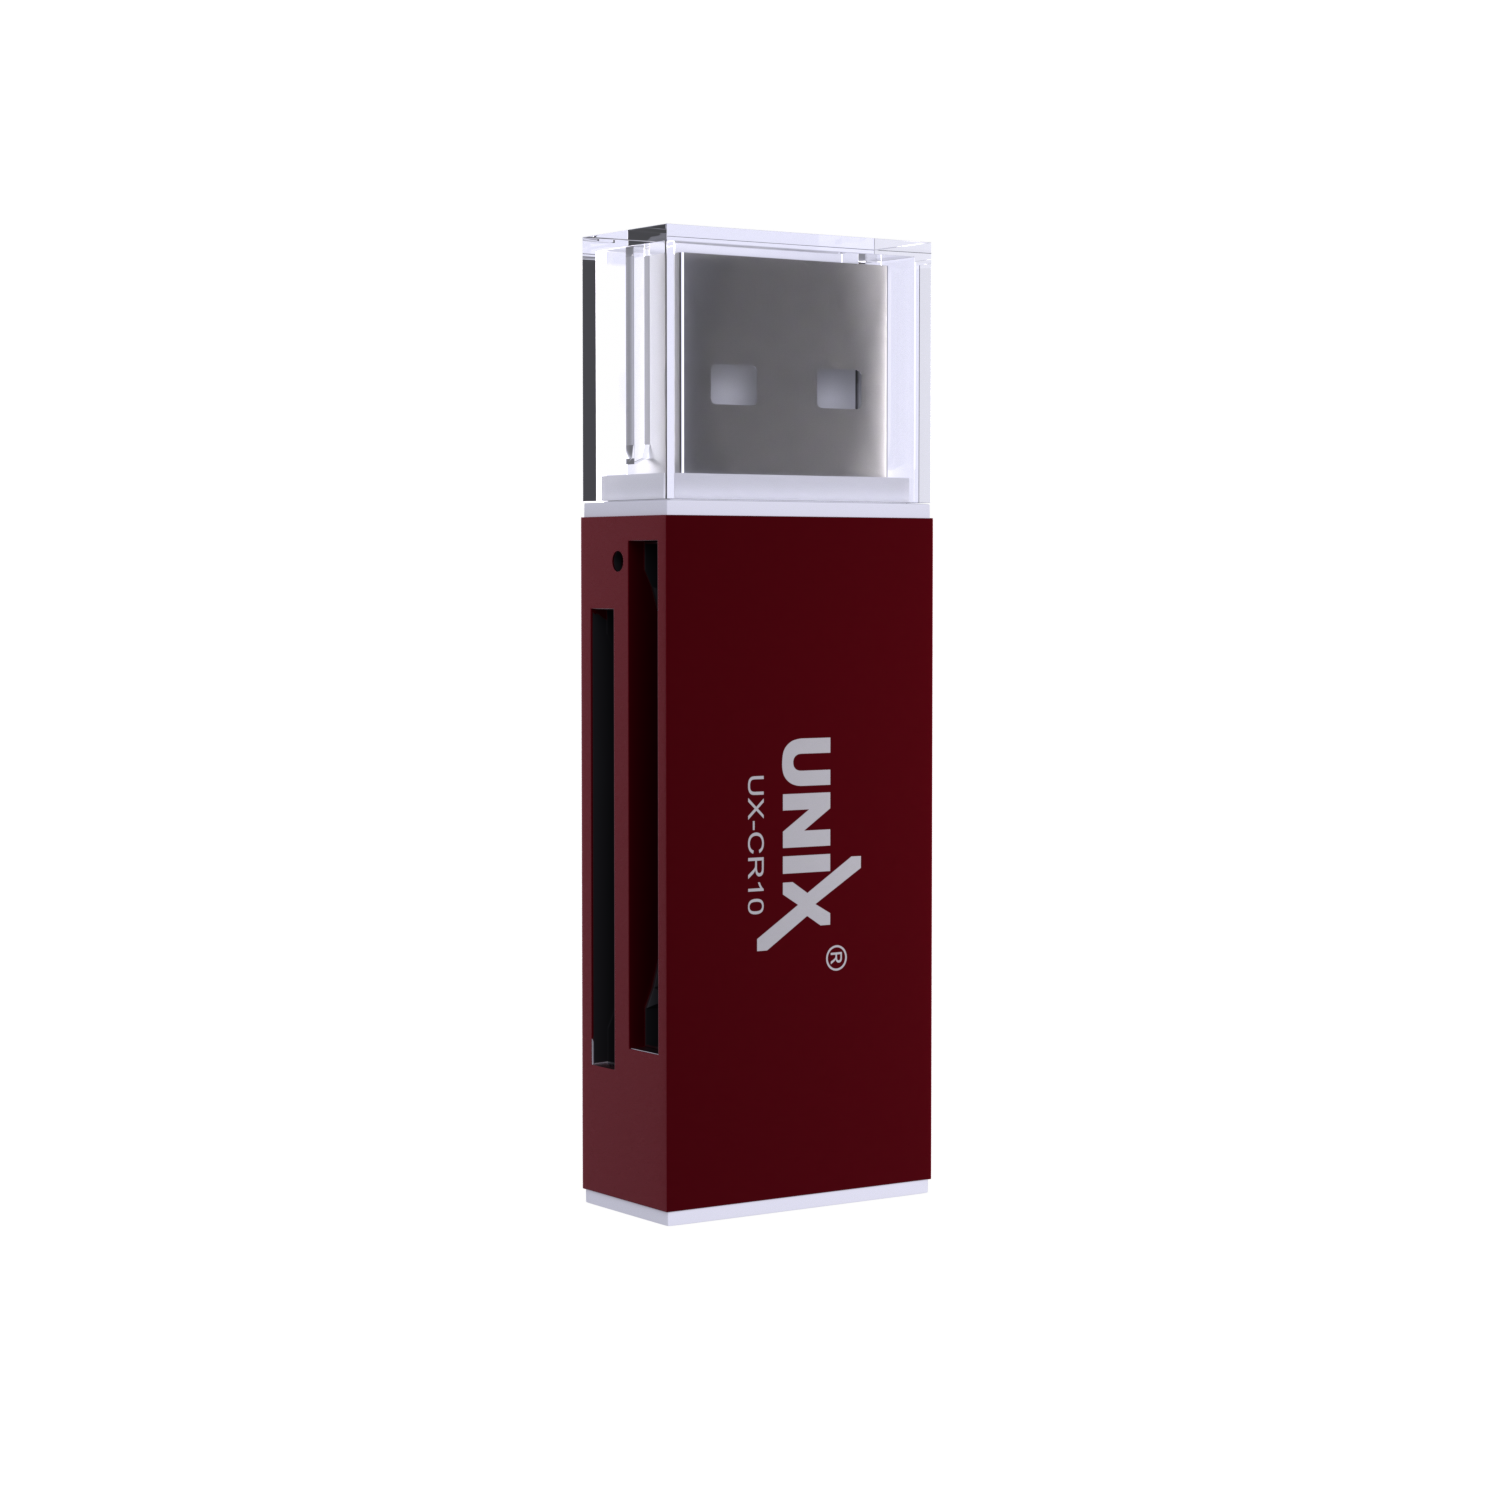 Unix UX-CR10 Card Reader | USB 3.0, High-Speed Data Transfer